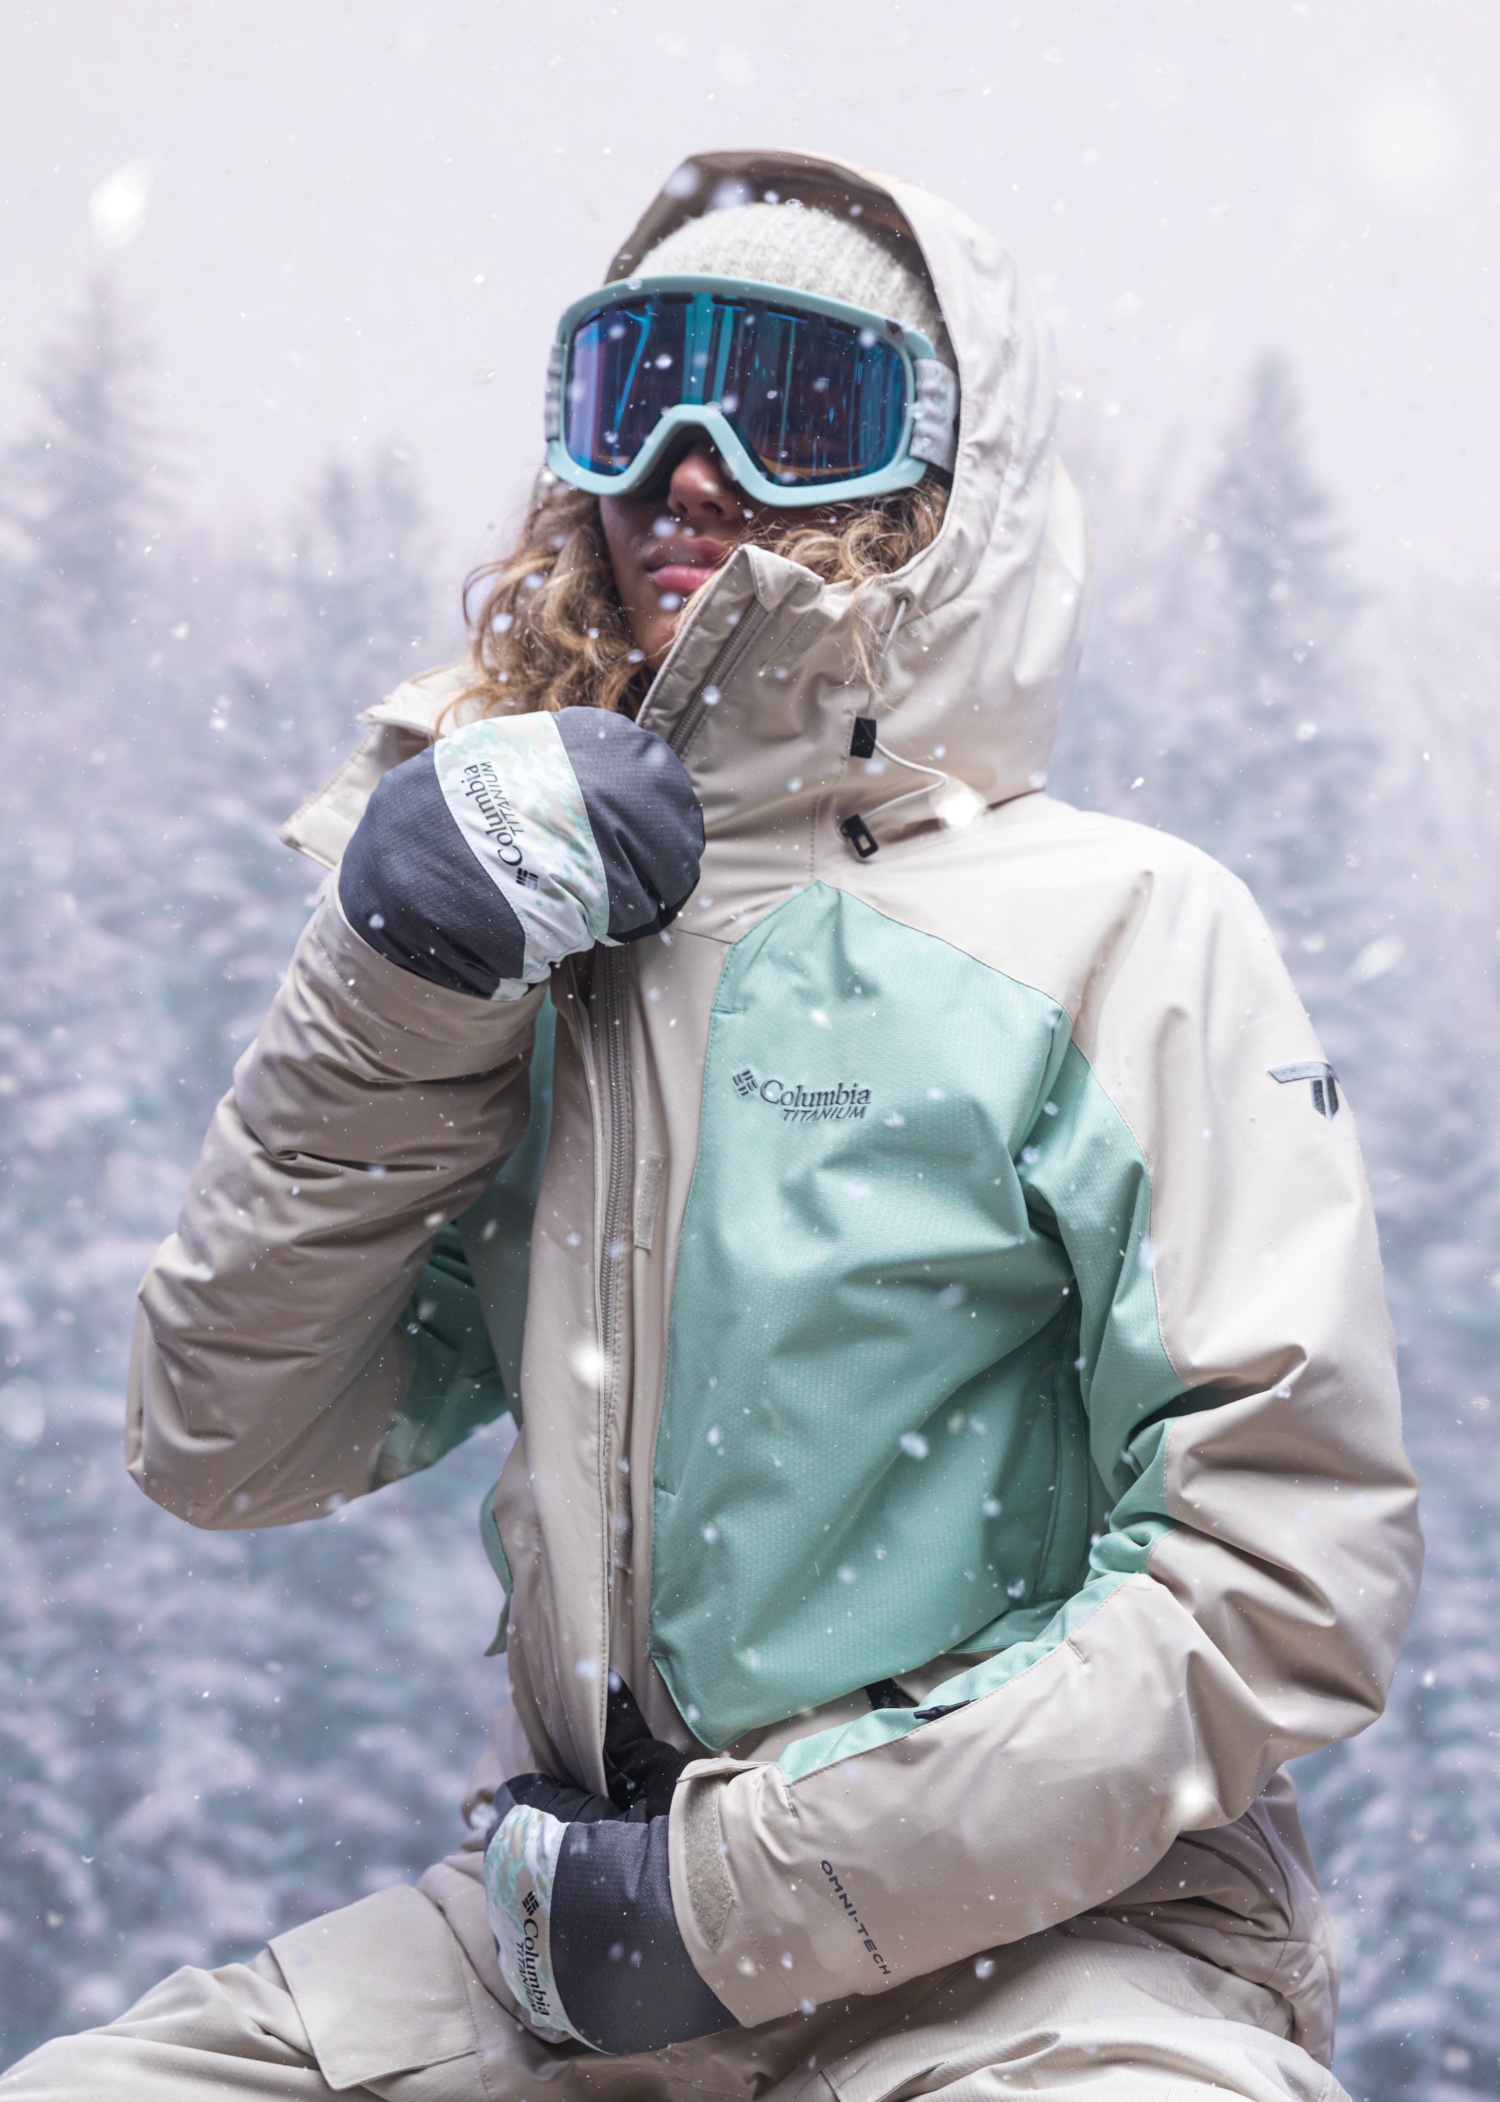 Columbia Highland Summit Ski Jacket and Highland Bib Pant Review: Warm and  Stylish Bib and Jacket Combo review - Snow Magazine